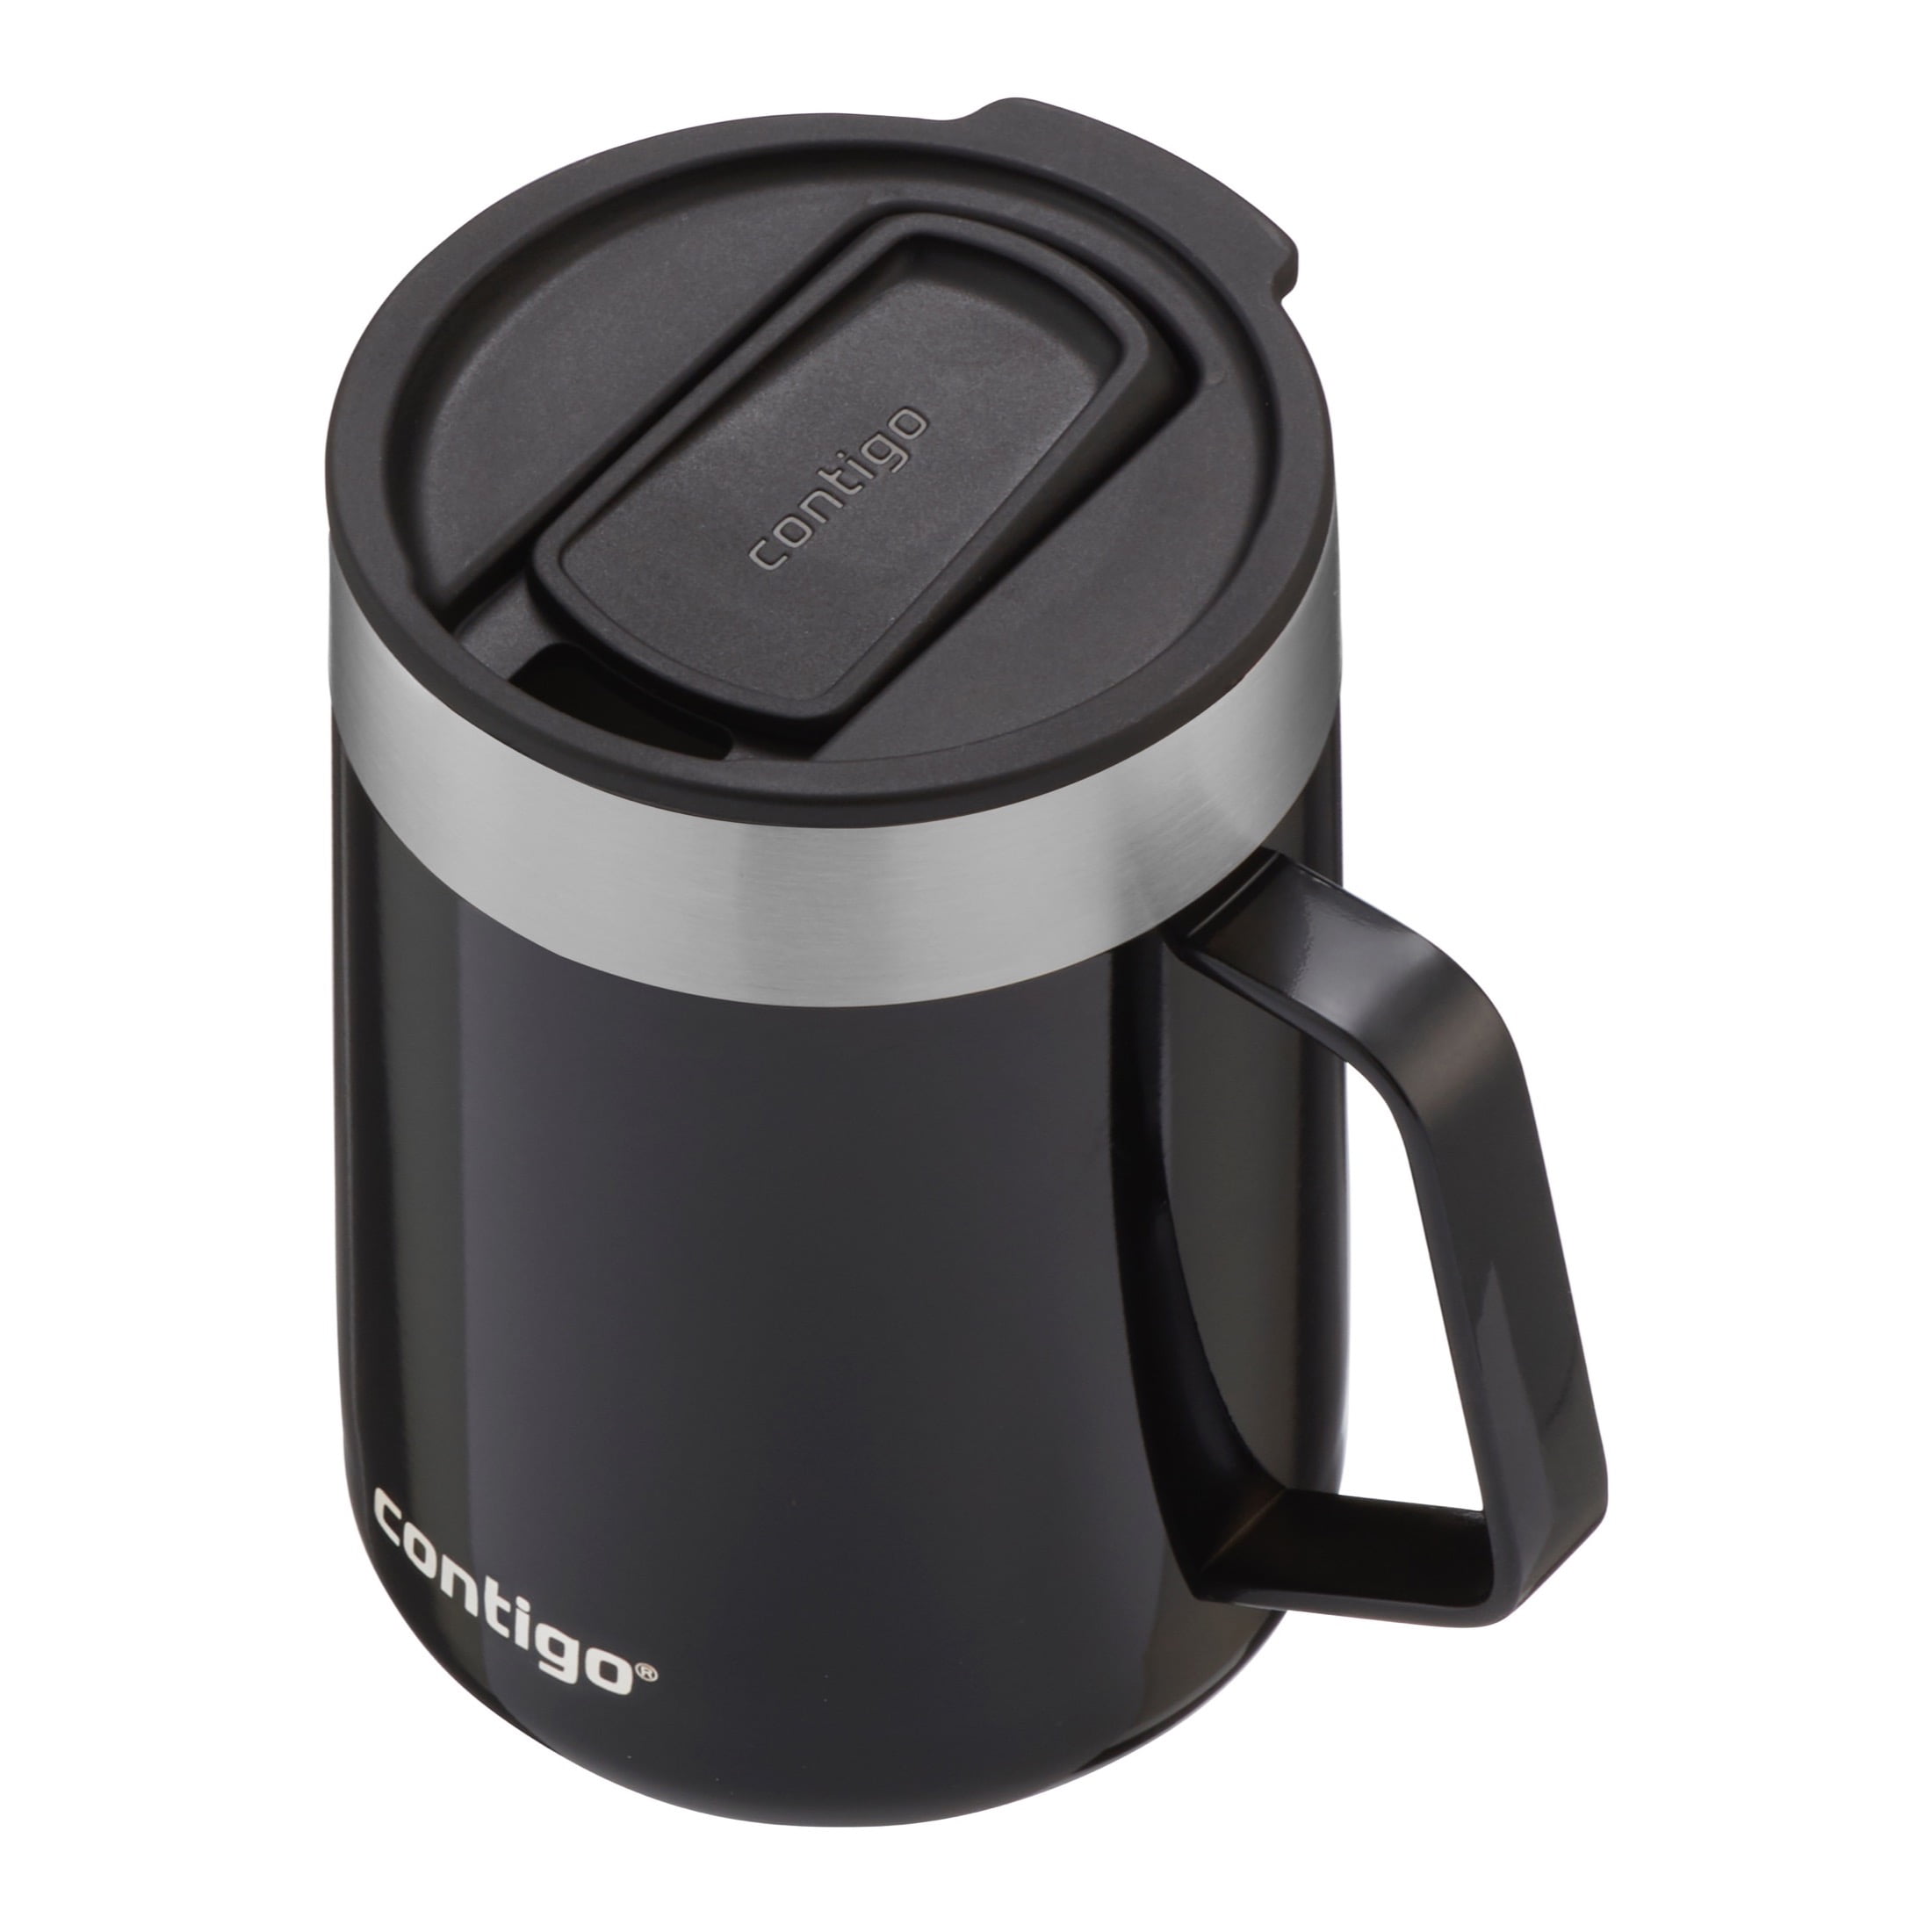  Contigo Streeterville Stainless Steel Travel Mug with  Splash-Proof Lid, 14oz Vacuum-Insulated Coffee Mug with Handle & Grip Base  to Prevent Slipping, Dishwasher Safe, Salt & Dark Ice: Home & Kitchen